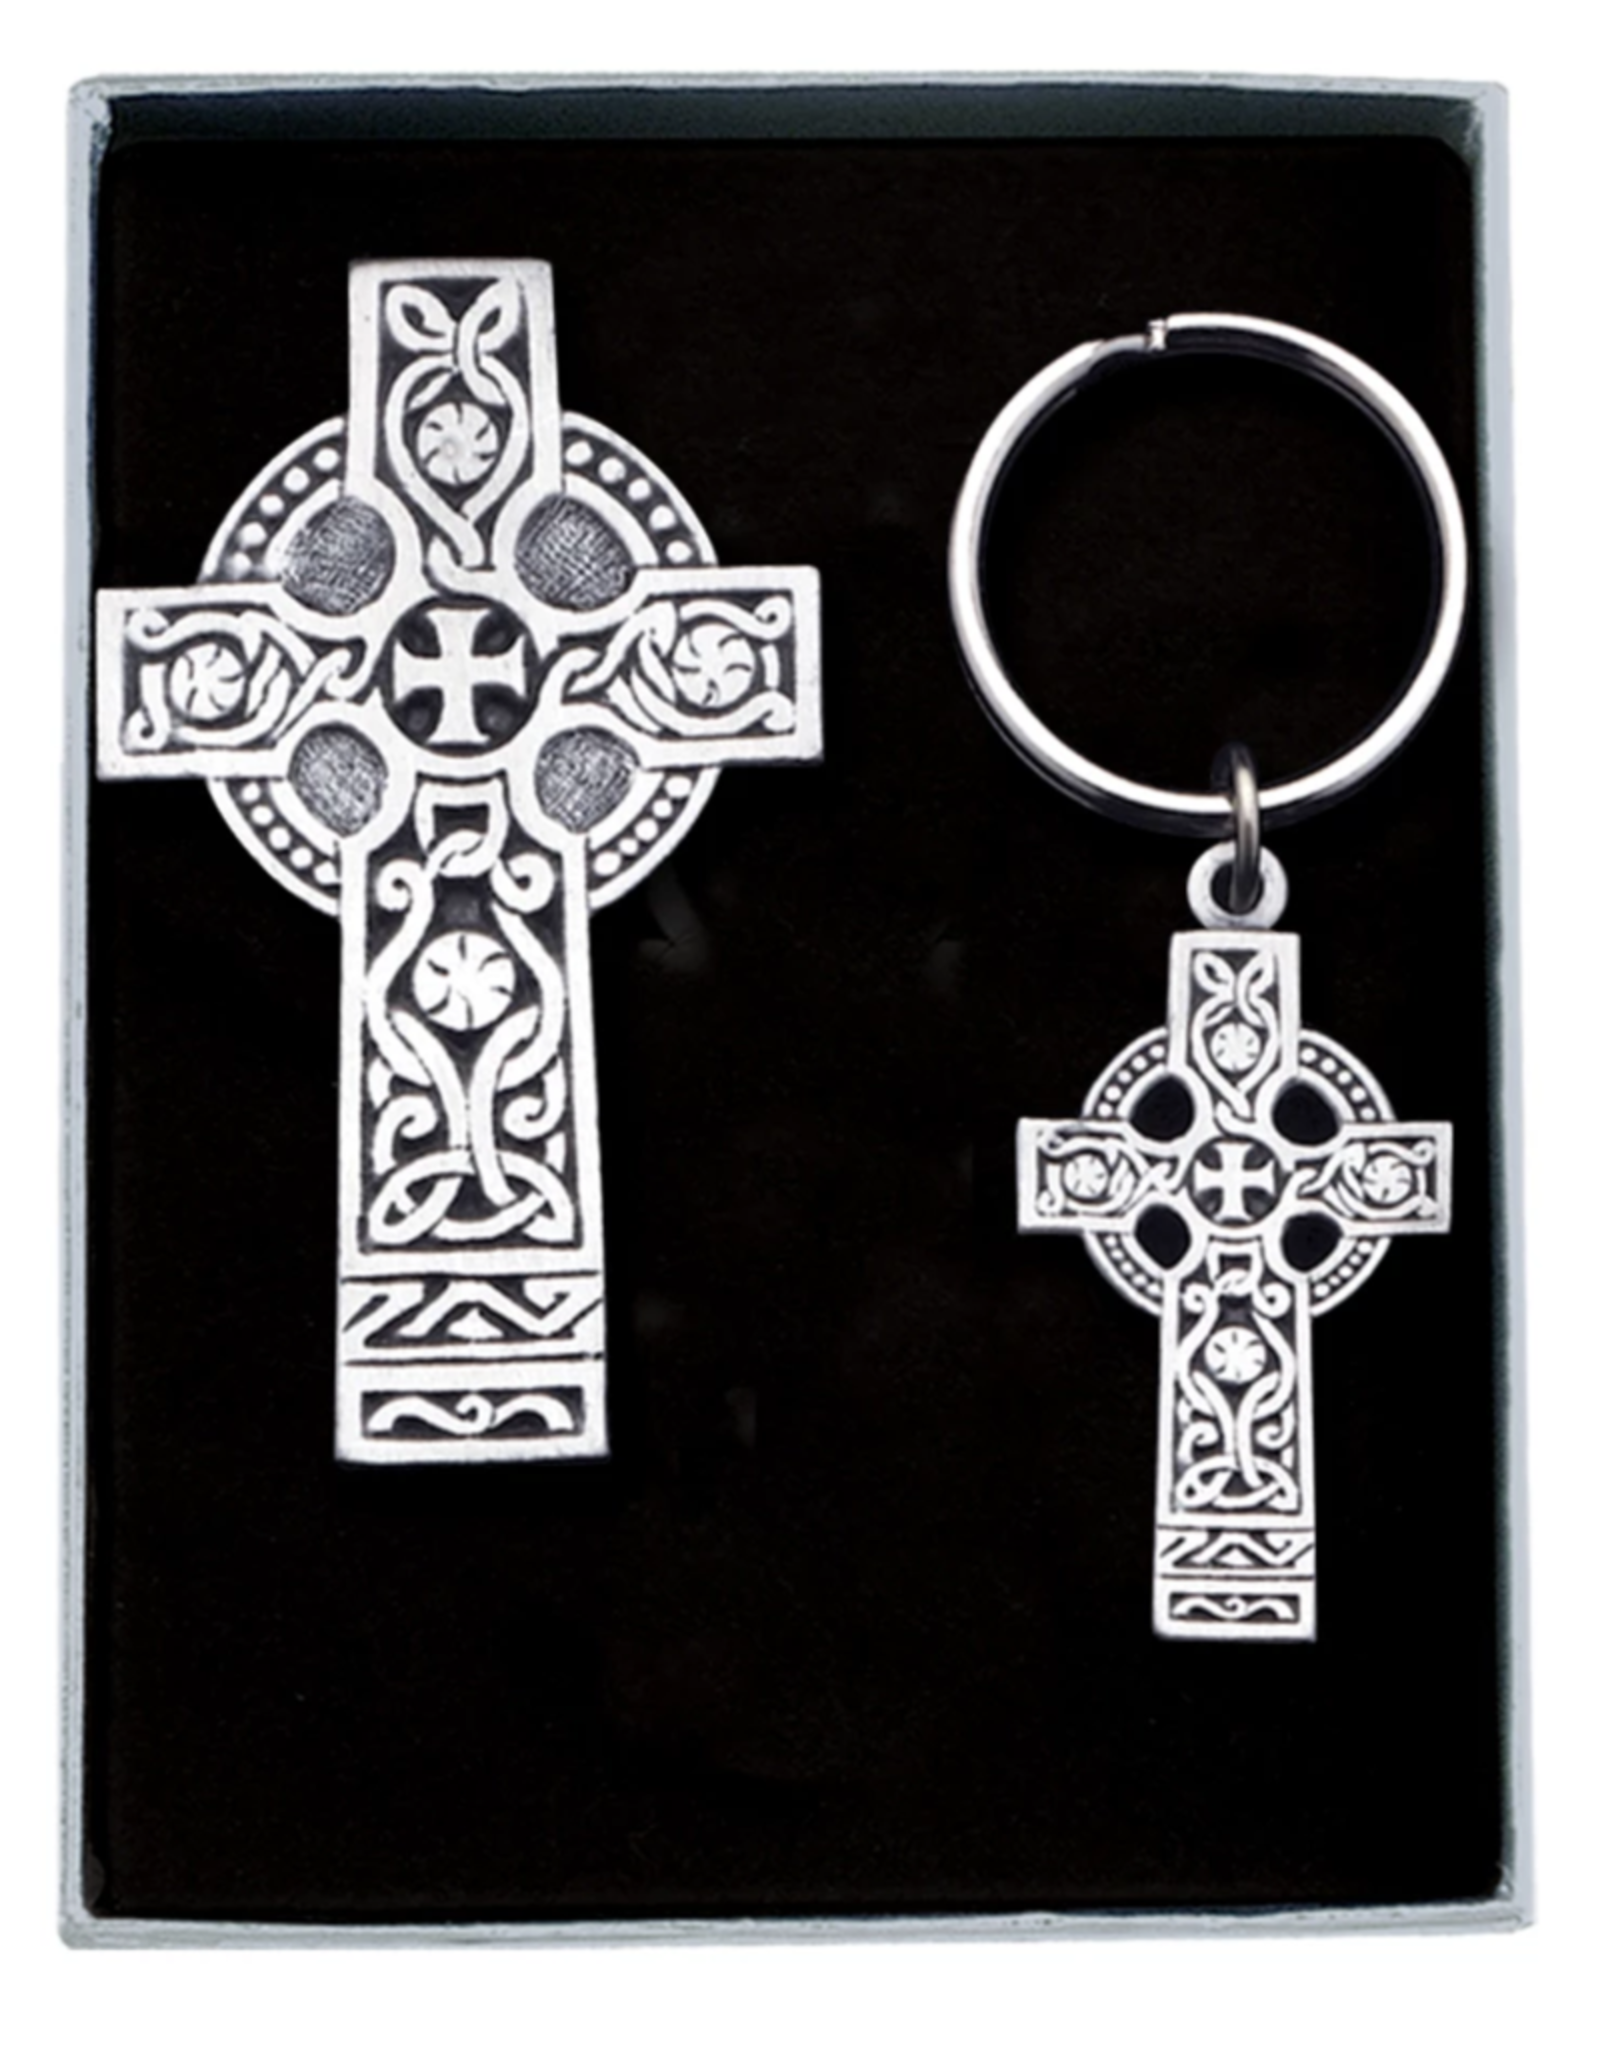 Abbey + CA Gift Celtic Cross Keychain and Car Visor Clip Set